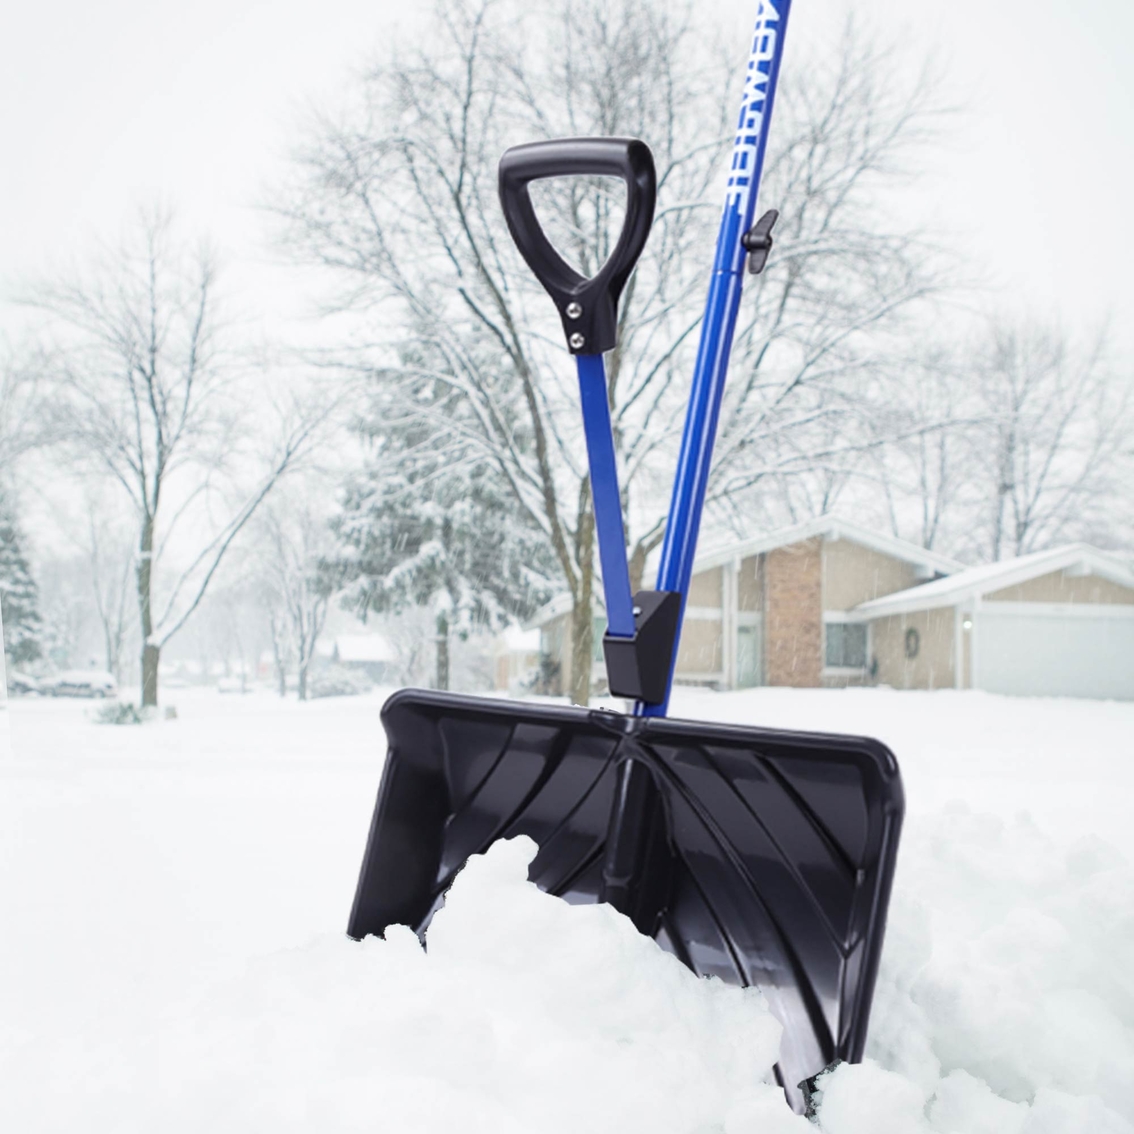 Snow Joe Shovelution Back Saving Snow Shovel with Spring Assist Handle - Image 4 of 4